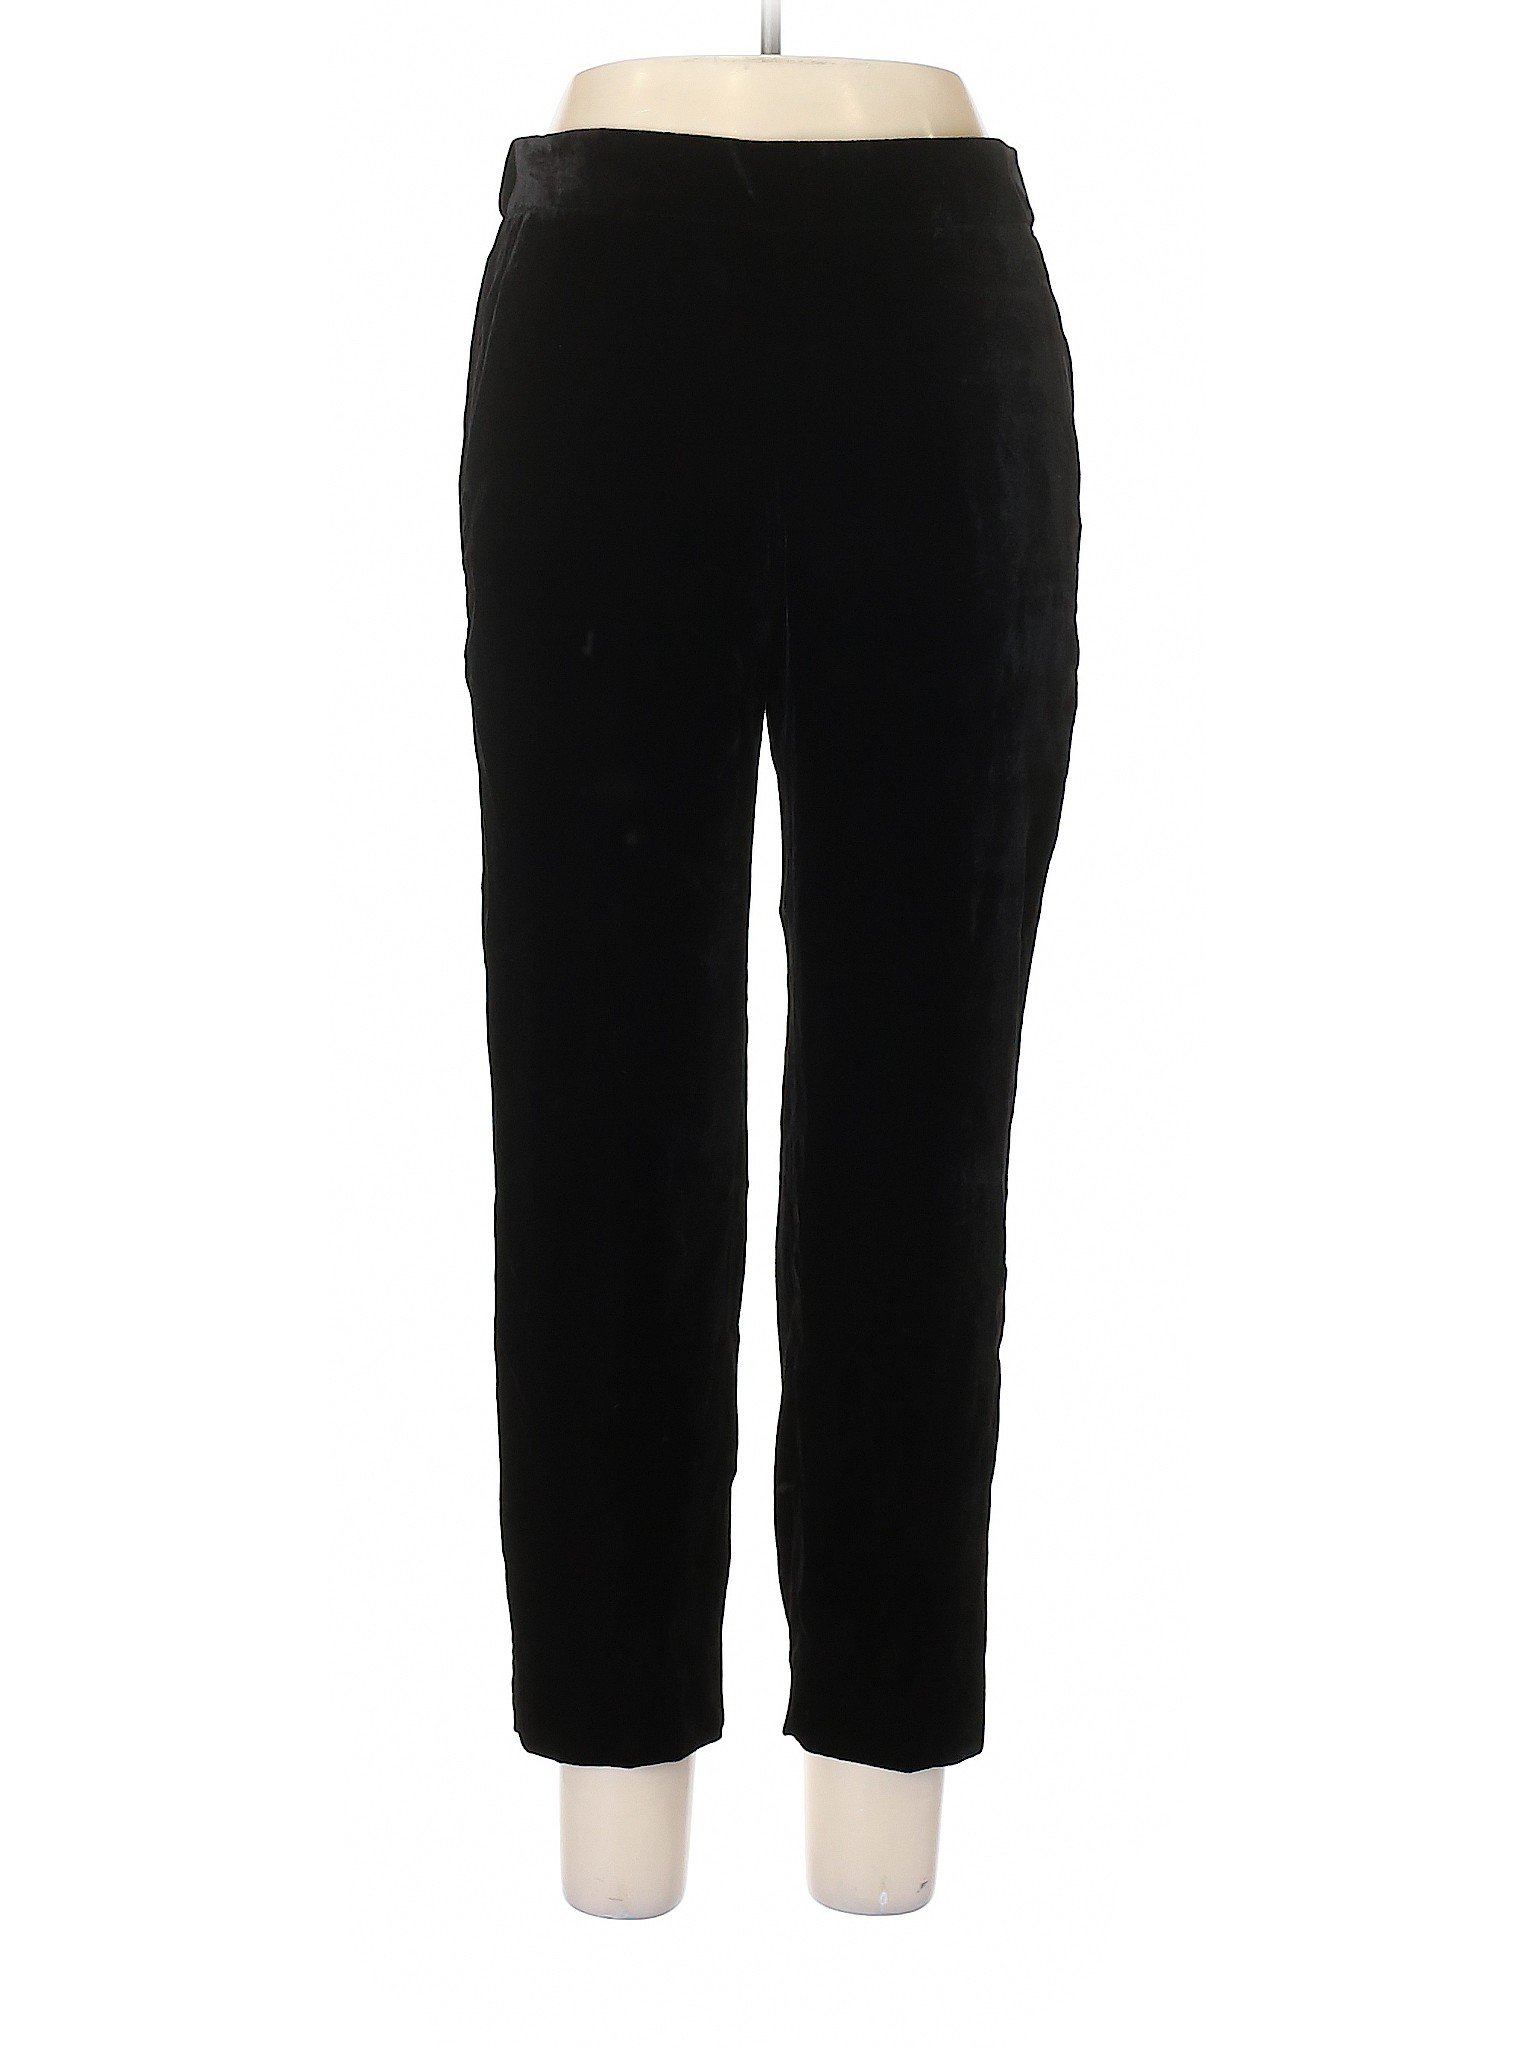 NWT J.Crew Women Black Velour Pants 10 | eBay